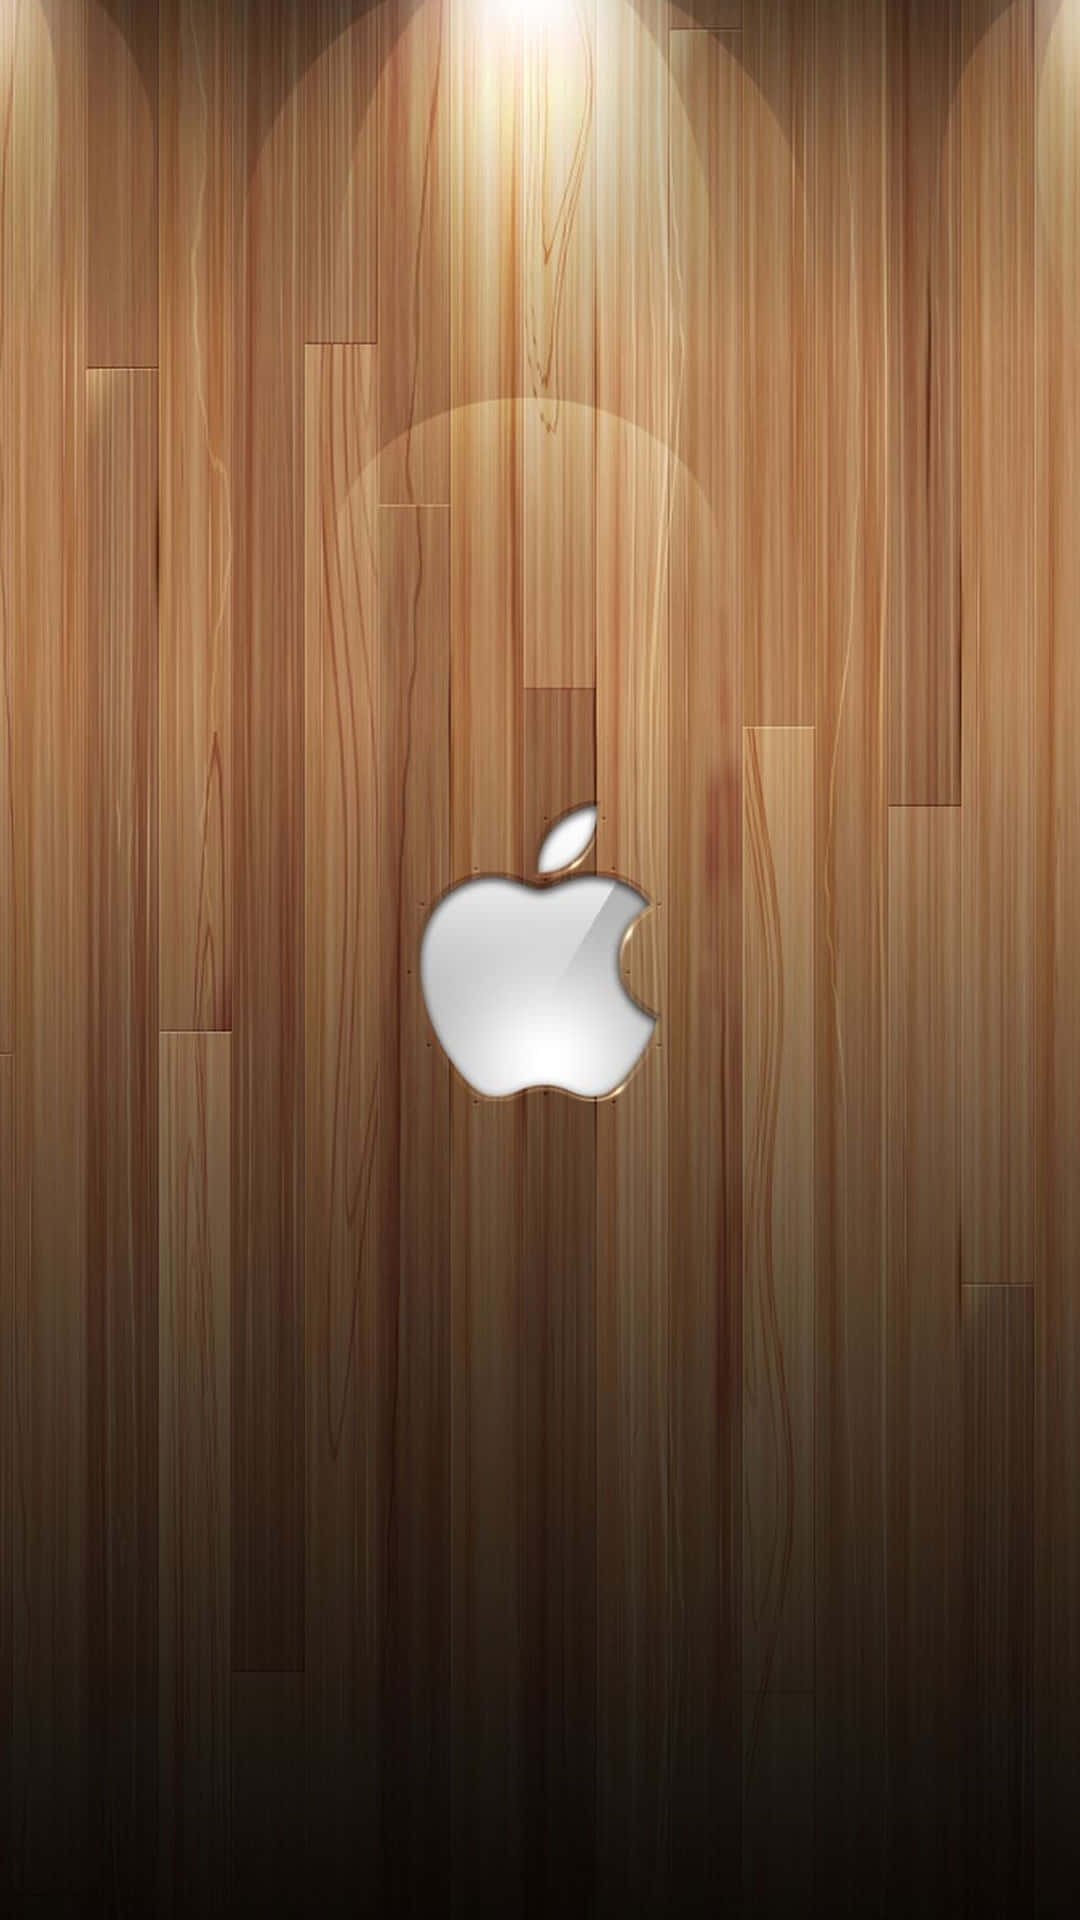 Wooden Amazing Apple Hd Iphone